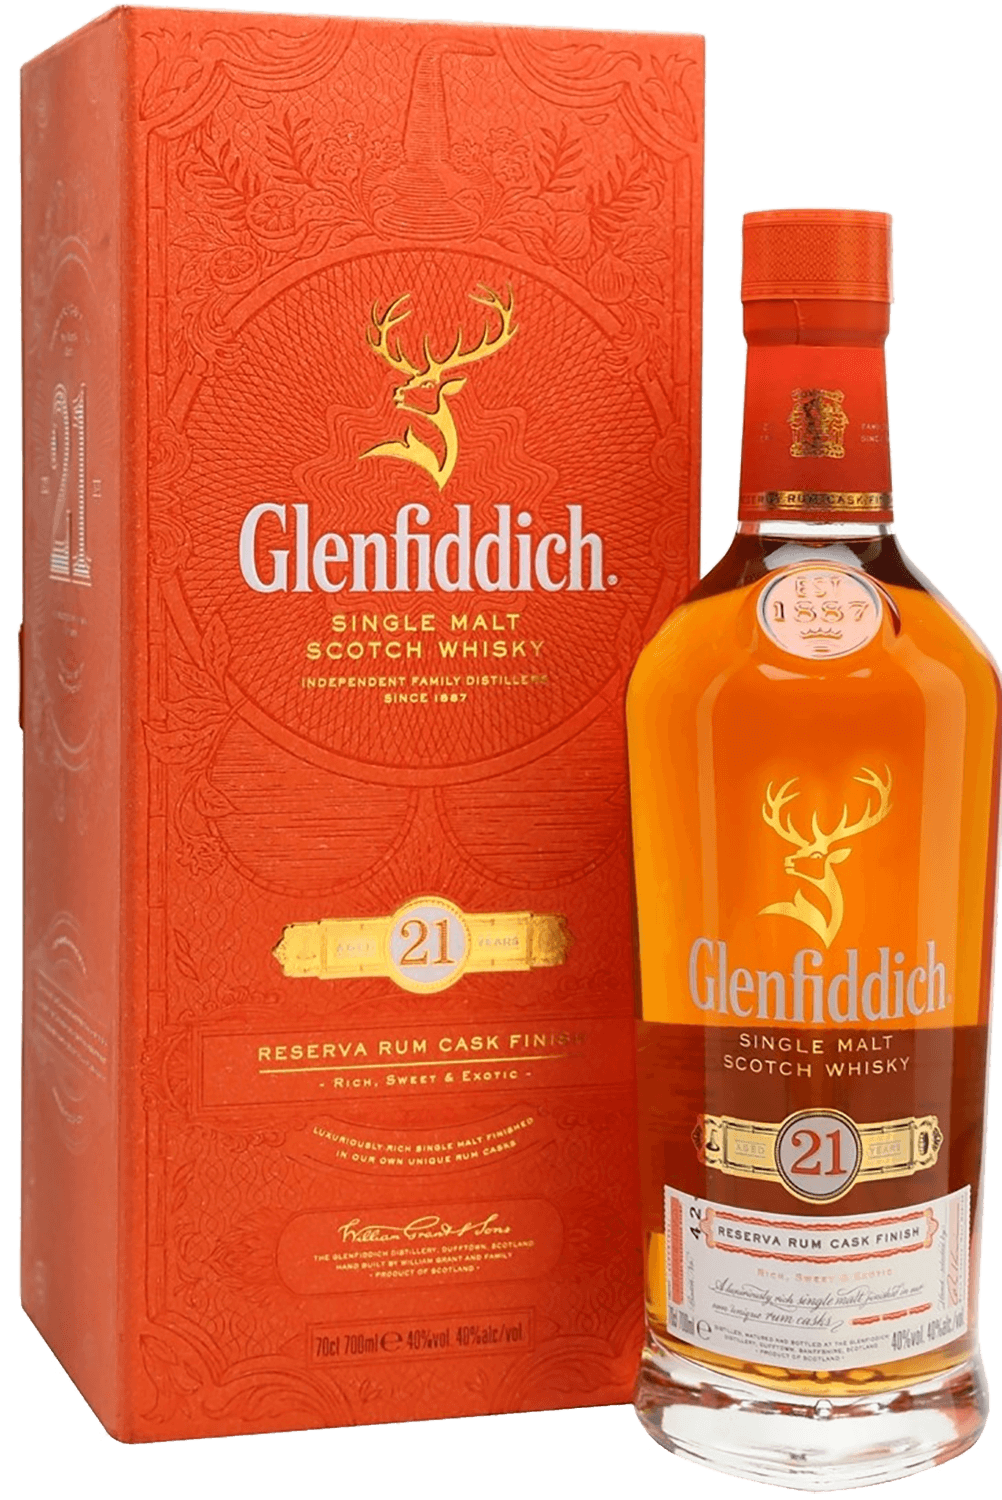 Glenfiddich Single Malt Scotch Whisky 21 yo (gift box) glenfiddich 18 y o single malt scotch whisky gift box